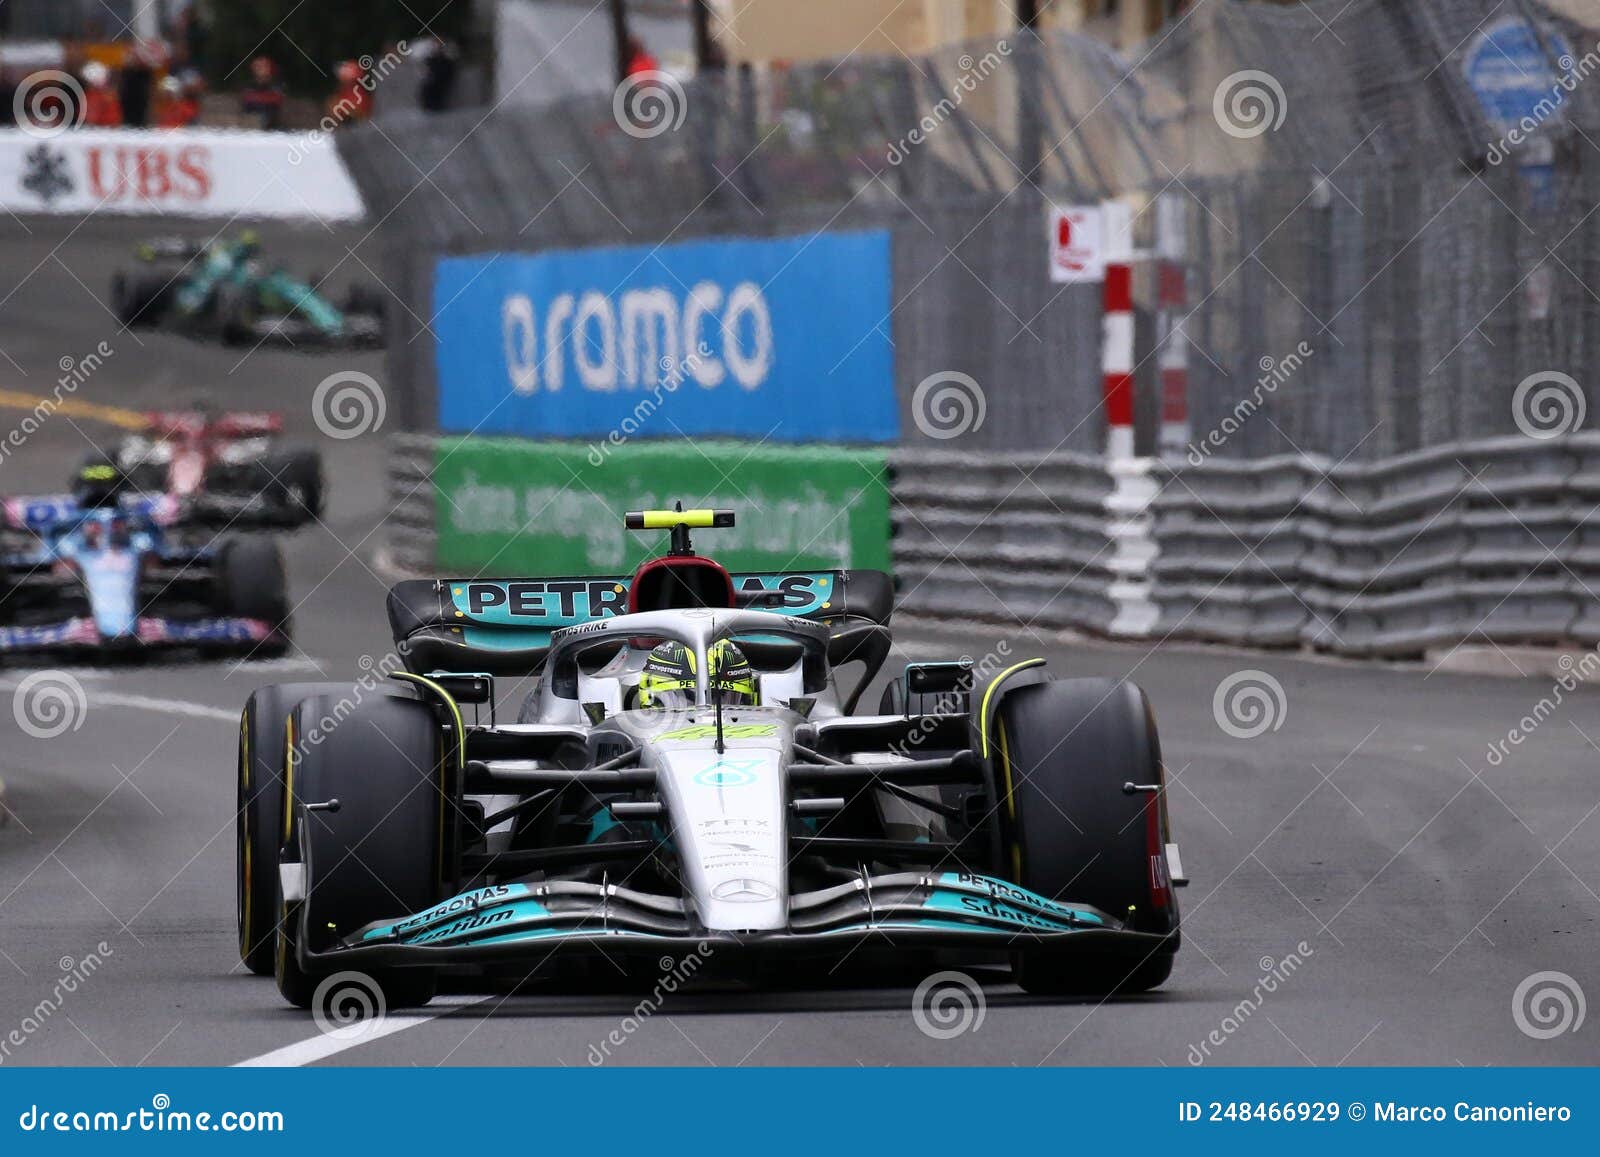 Lewis Hamilton 22 British Racing Driver Formula One World Champion Poster Photo 